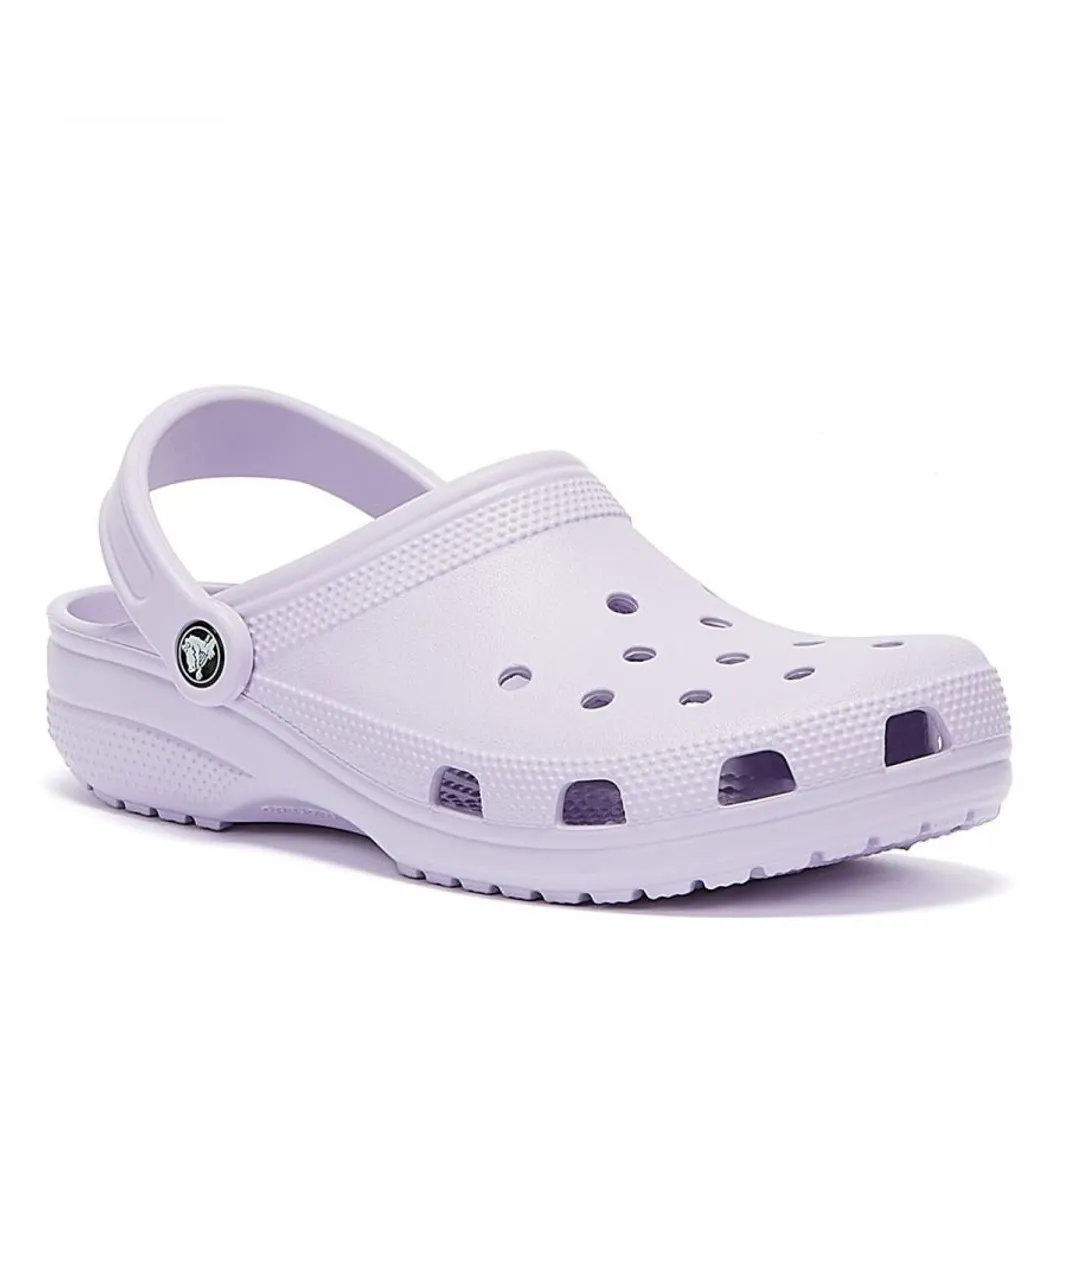 Crocs Womenss Classic Clogs in Lavender - Purple